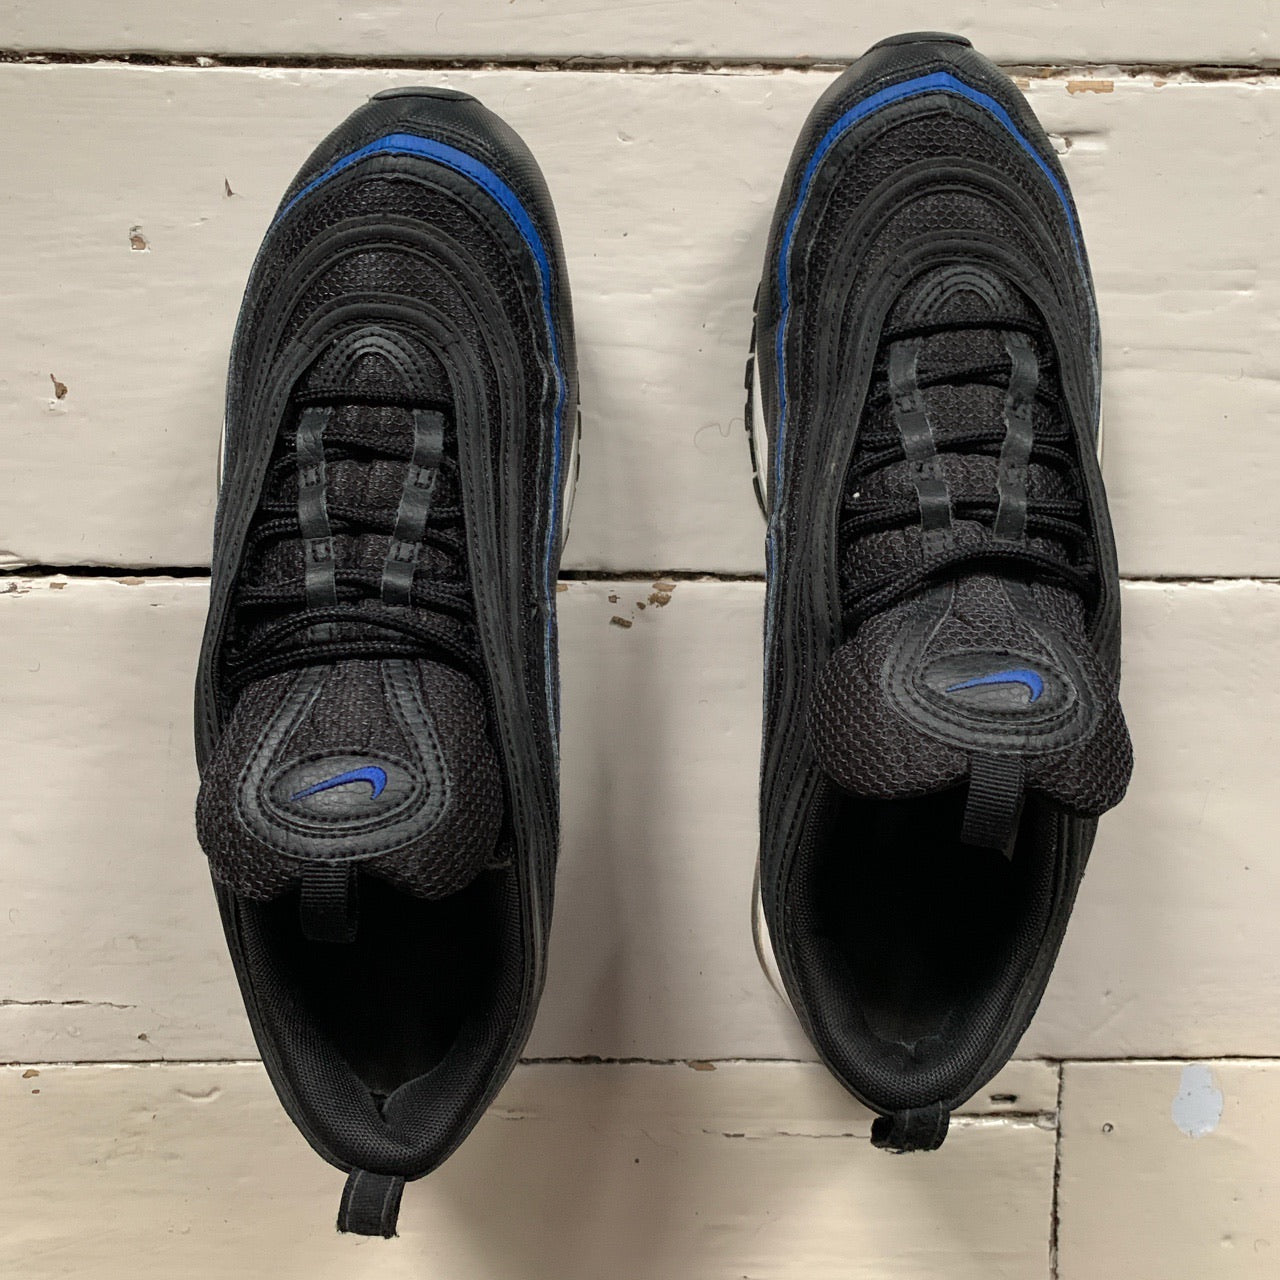 Nike Air Max 97 Black and Blue (UK 9)